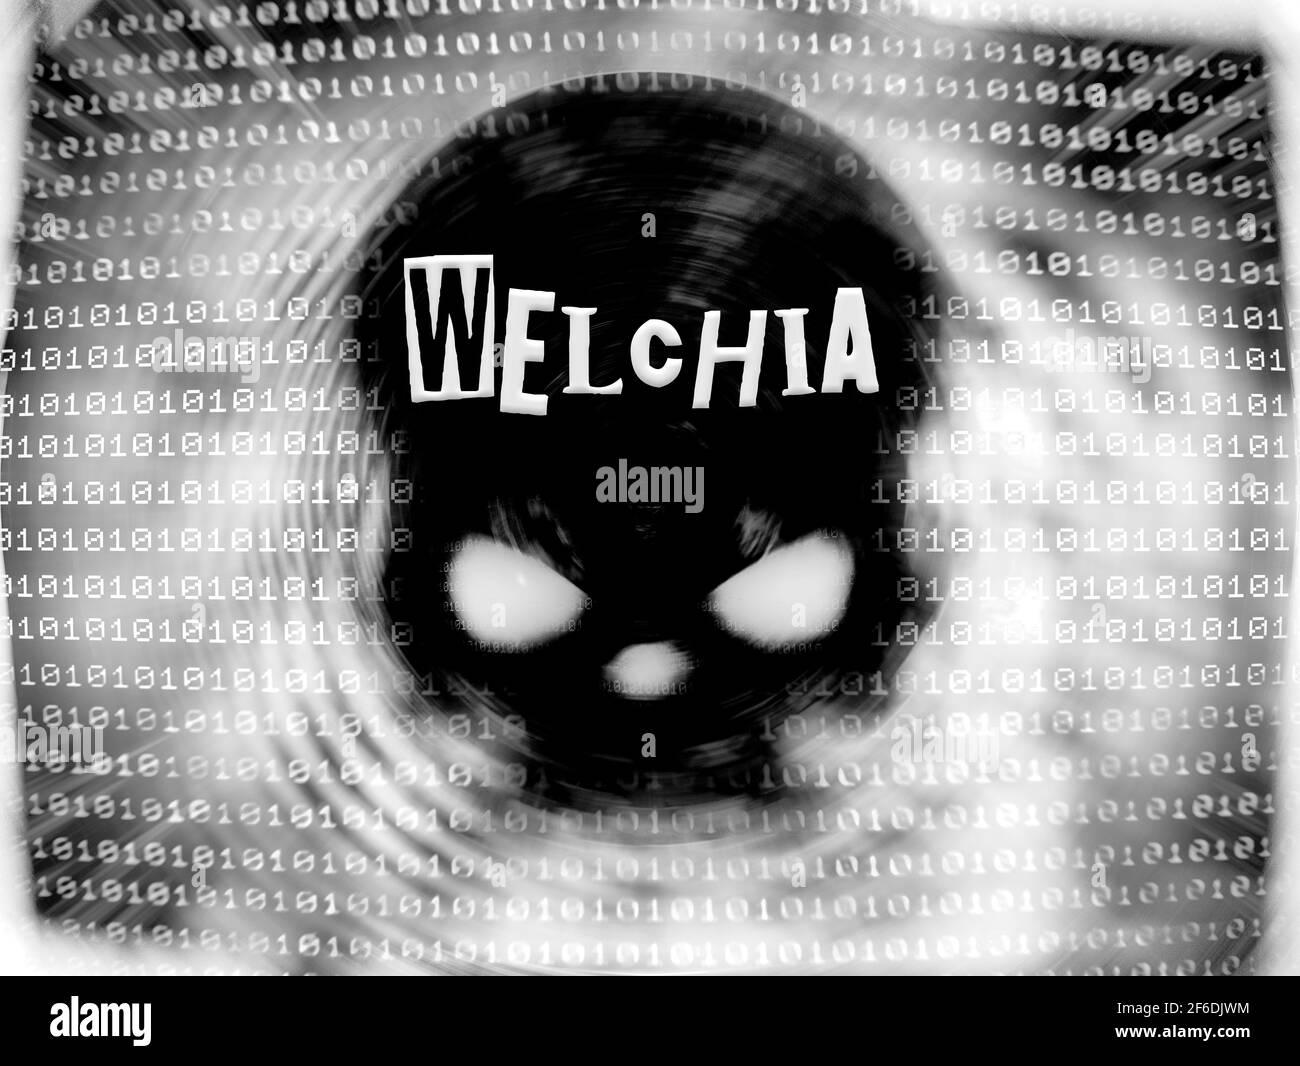 Welchia worm, Nachi worm, Virus, Binary background, Black and White, Malicious software Stock Photo